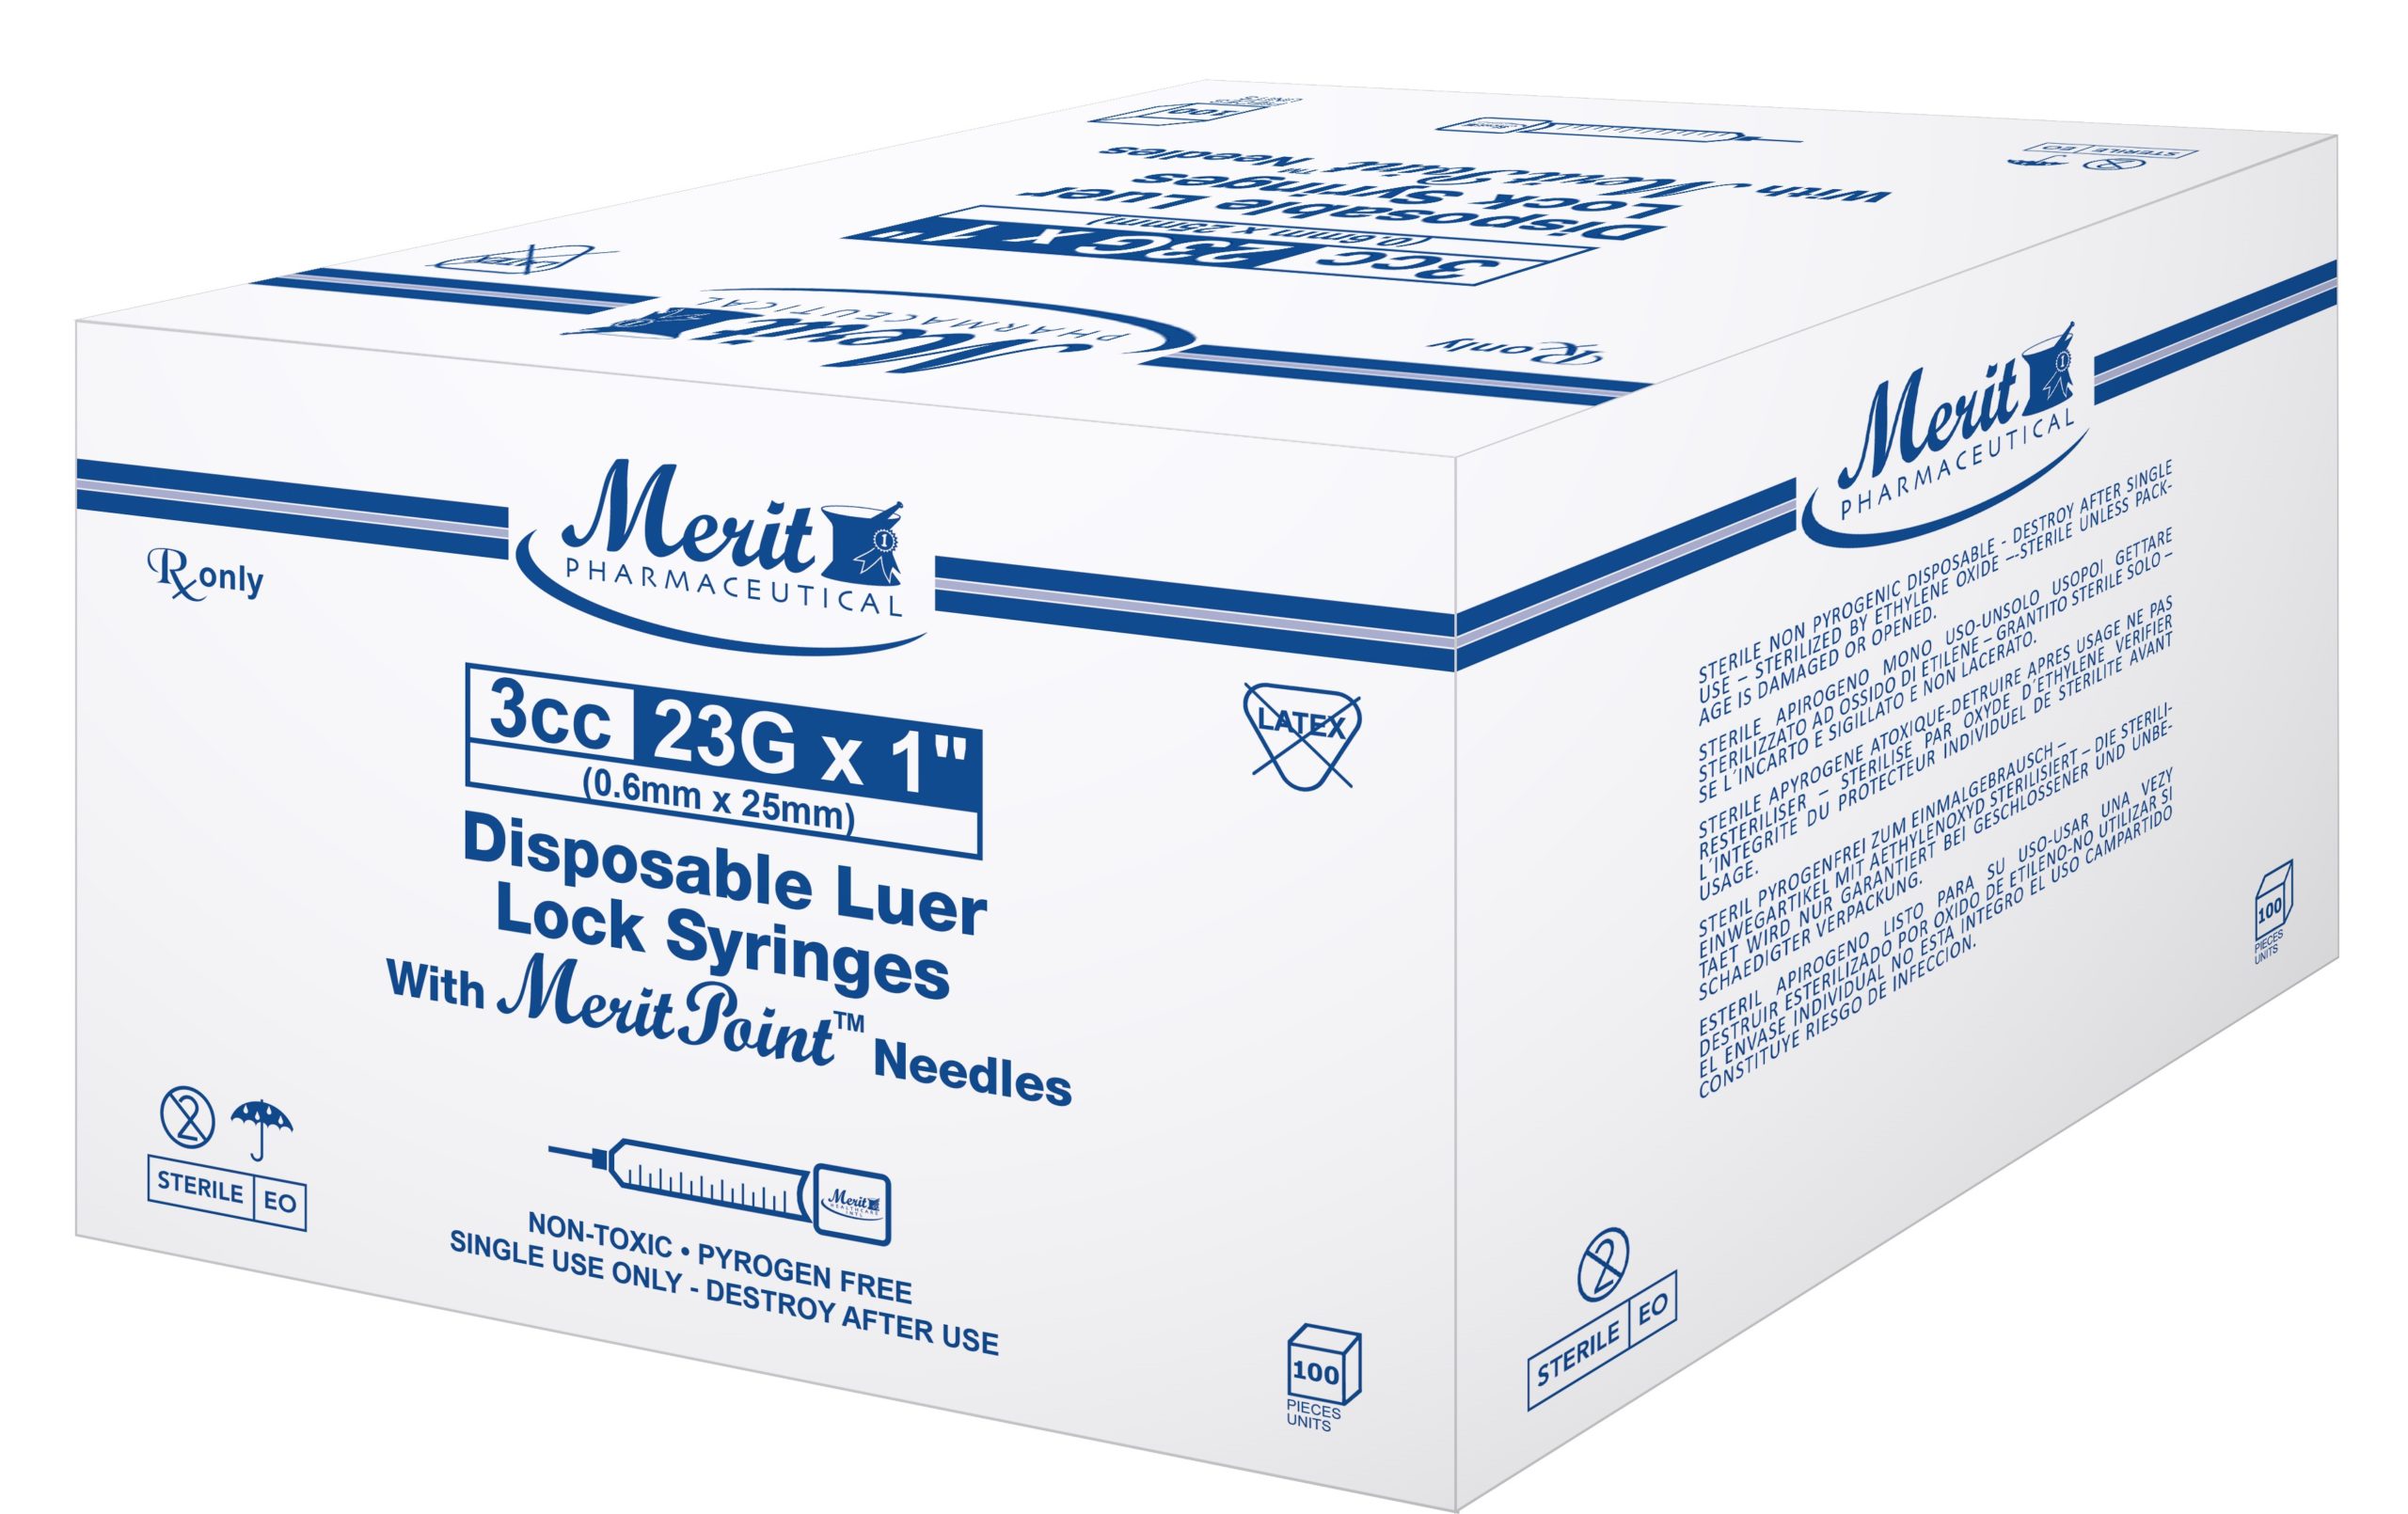 dråbe Souvenir hensigt 3mL 23G x 1", 3cc Syringe, 23G x 1", Luer Lock # 44285 - Merit  Pharmaceutical